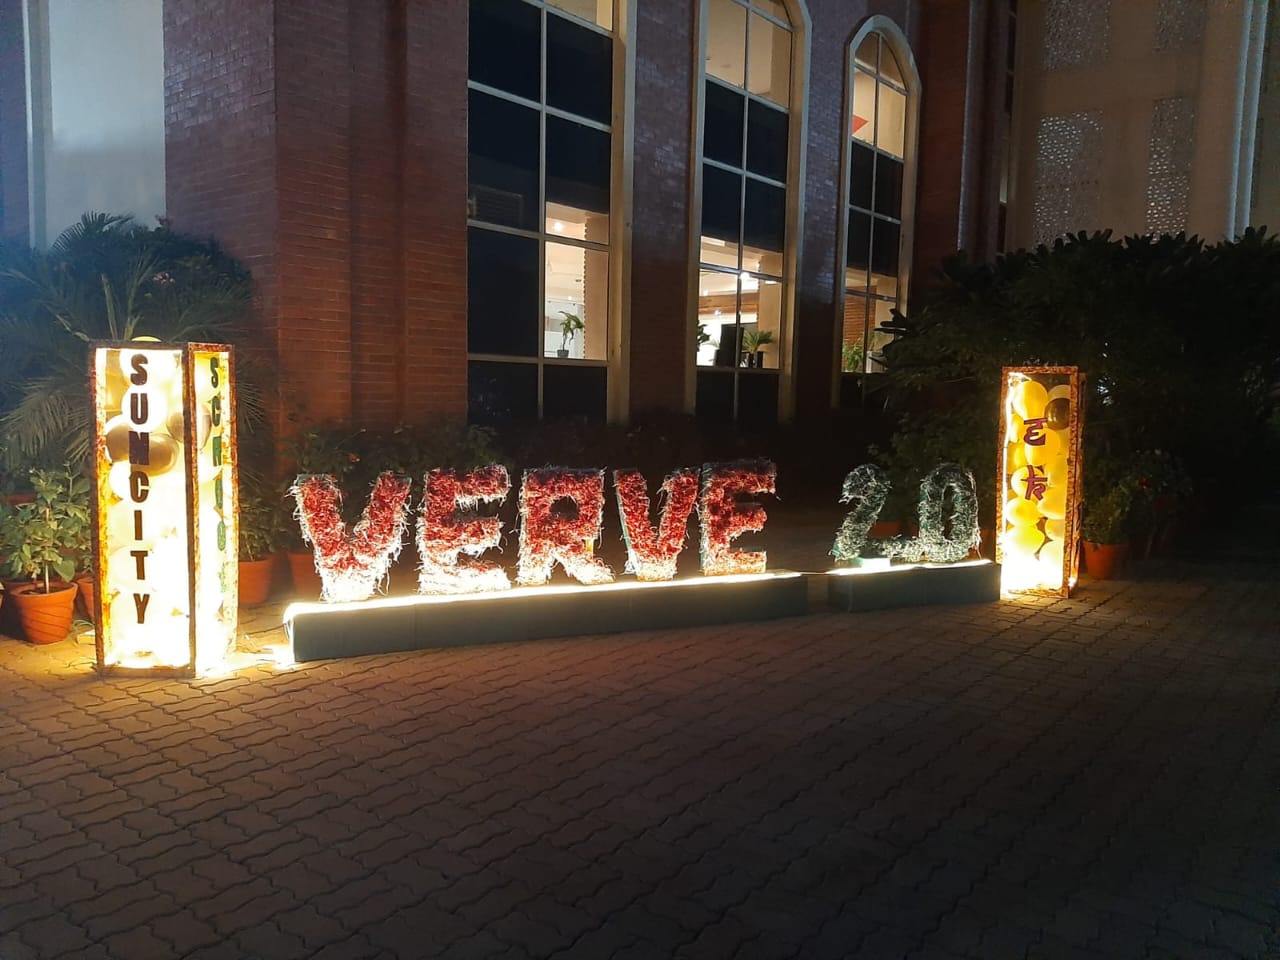 Annual show Verve 2.0